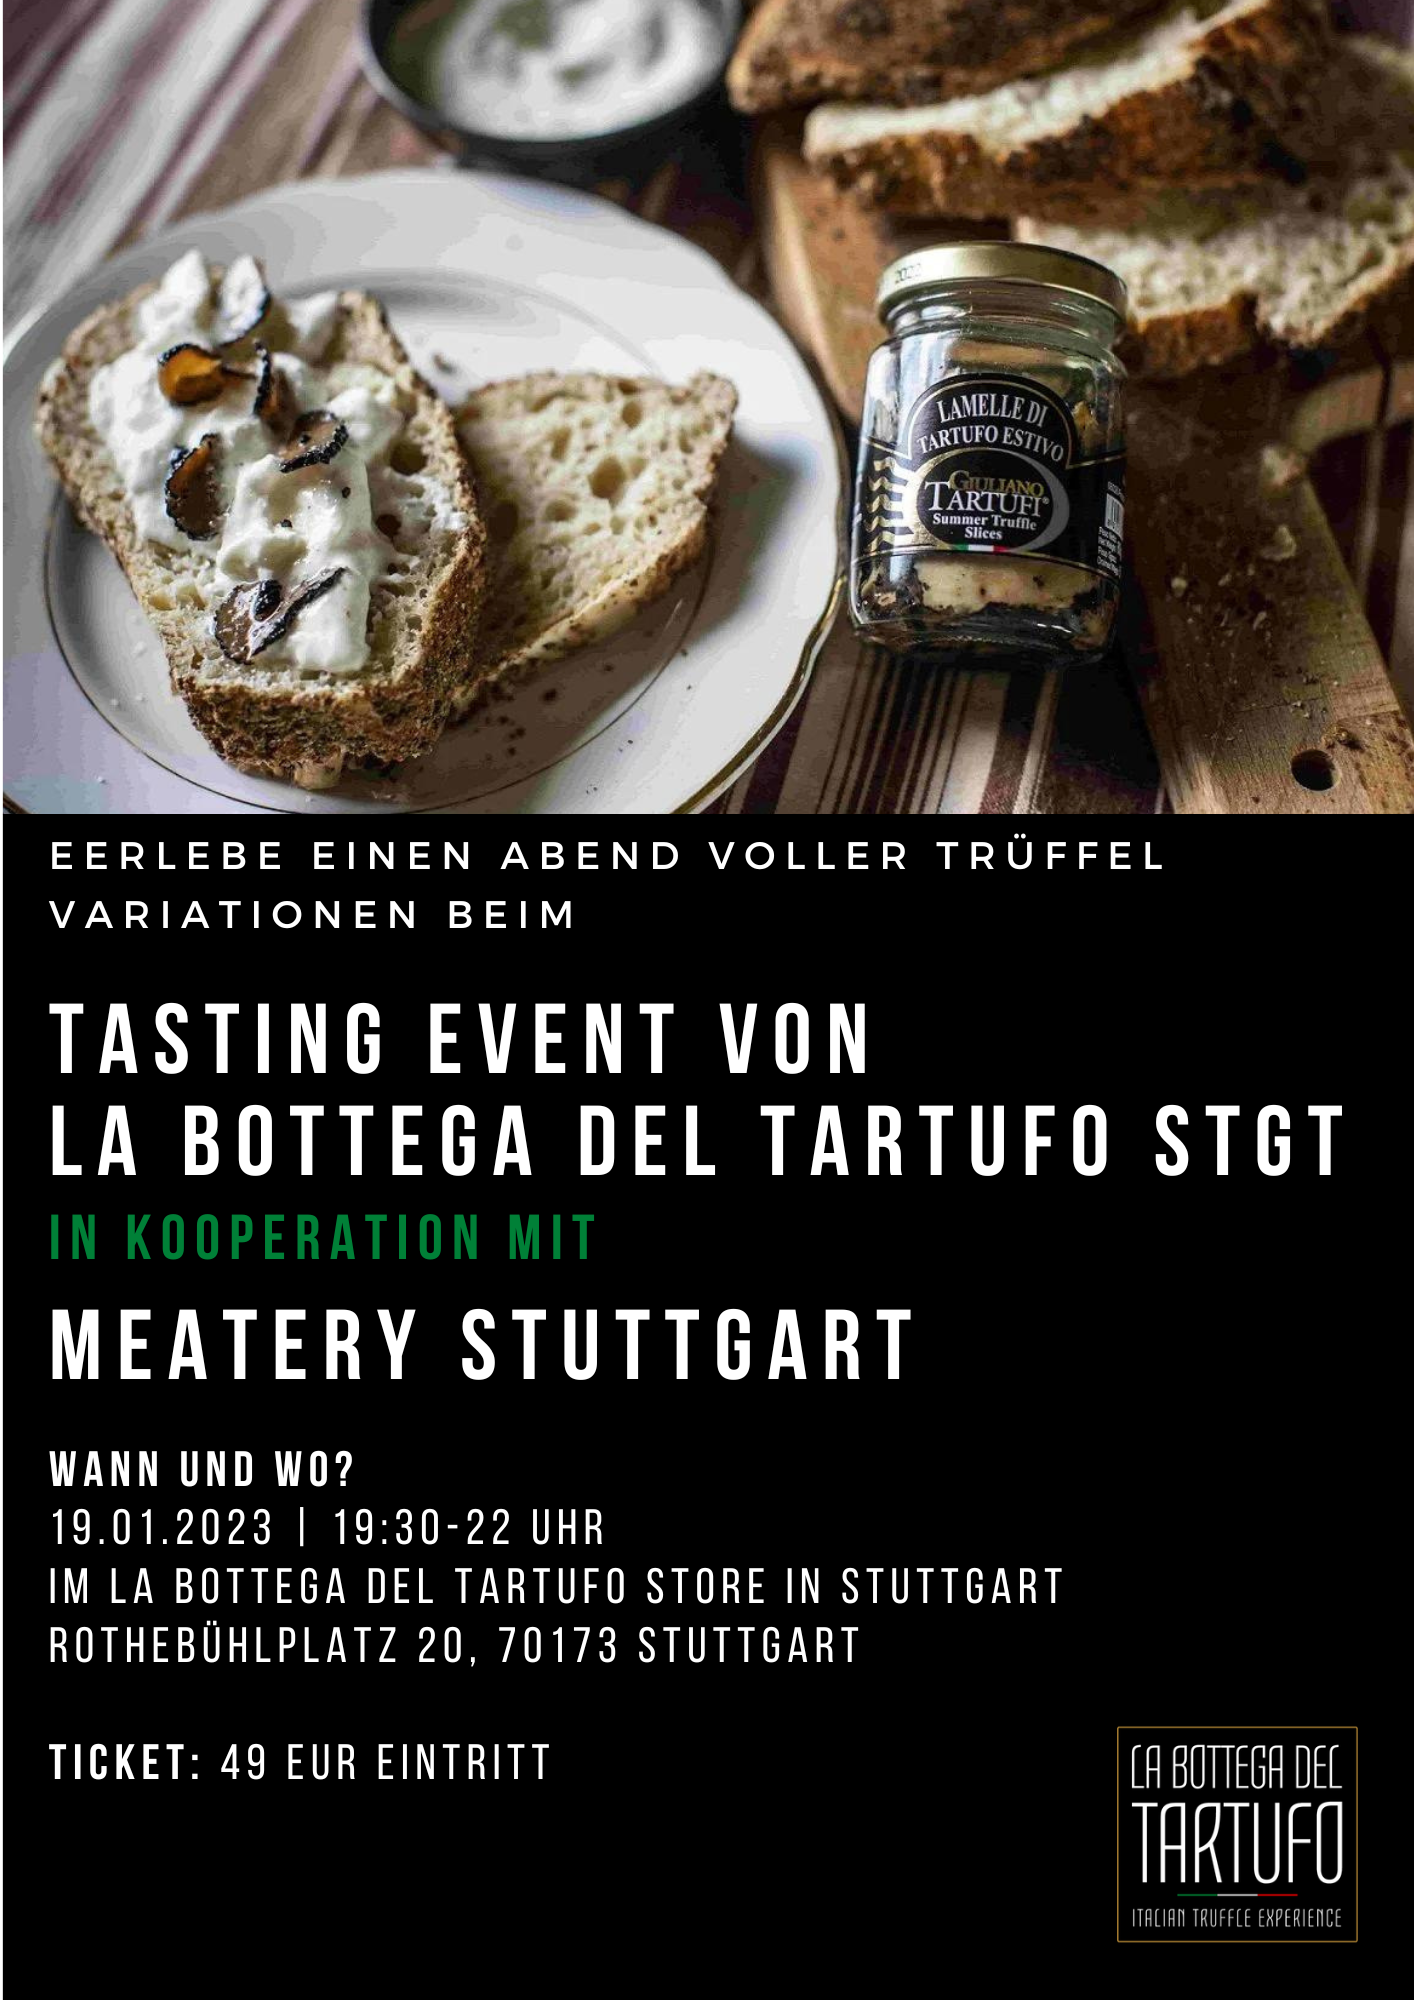 TICKET Truffle Tasting Event in Stuttgart on January 19th, 2023